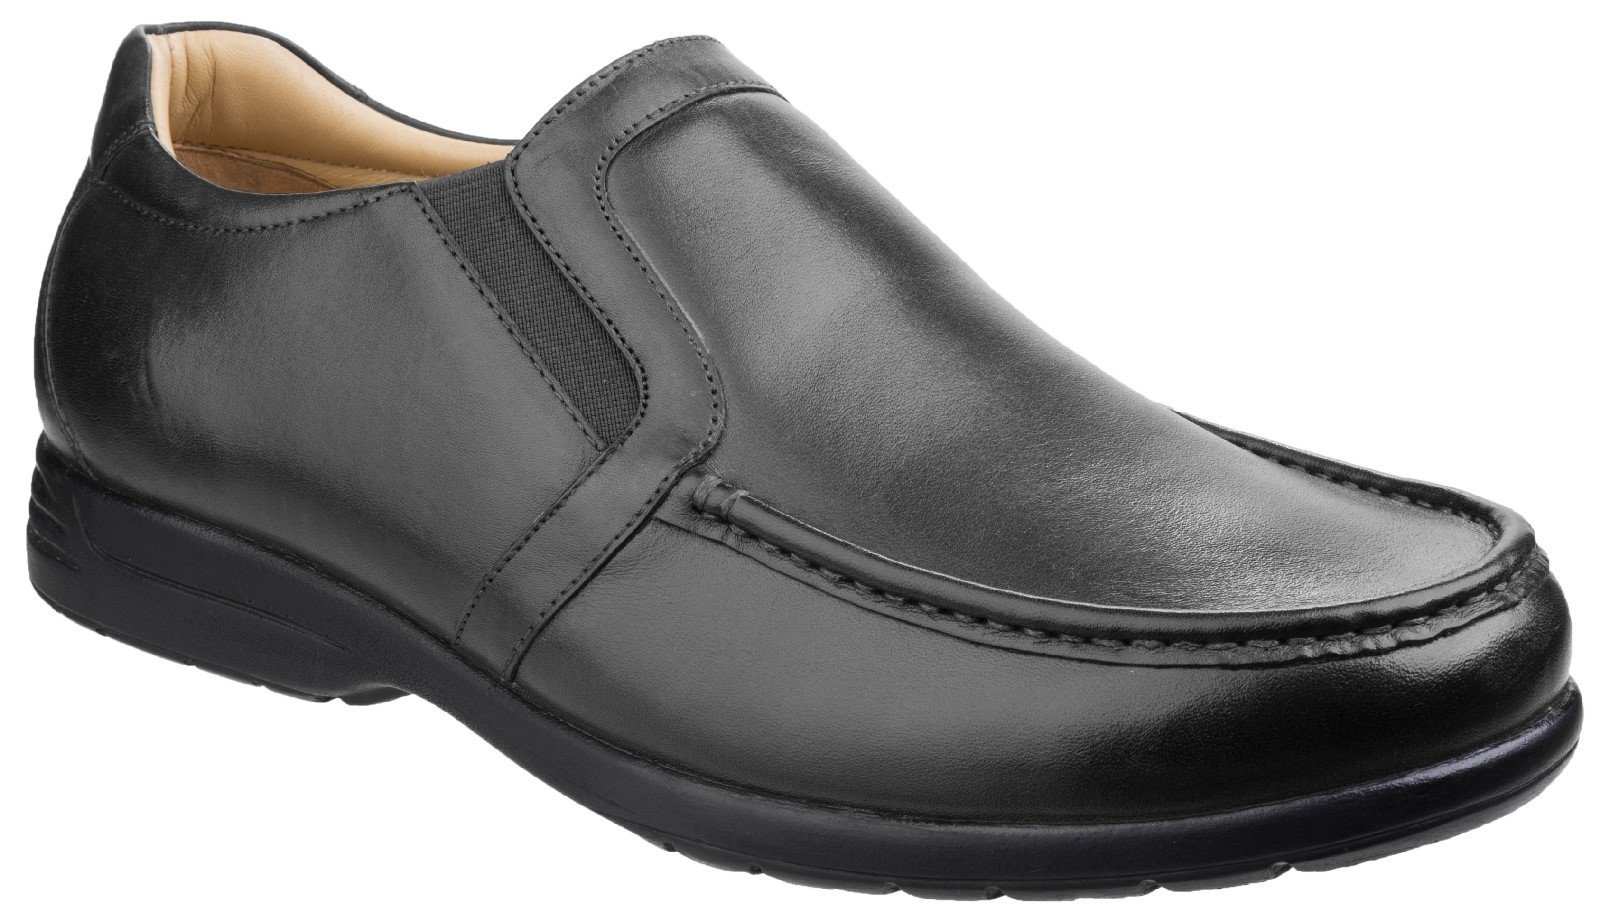 Fleet & Foster Men's Gordon Dual Fit Shoe Black 26319-43935 - Black 9